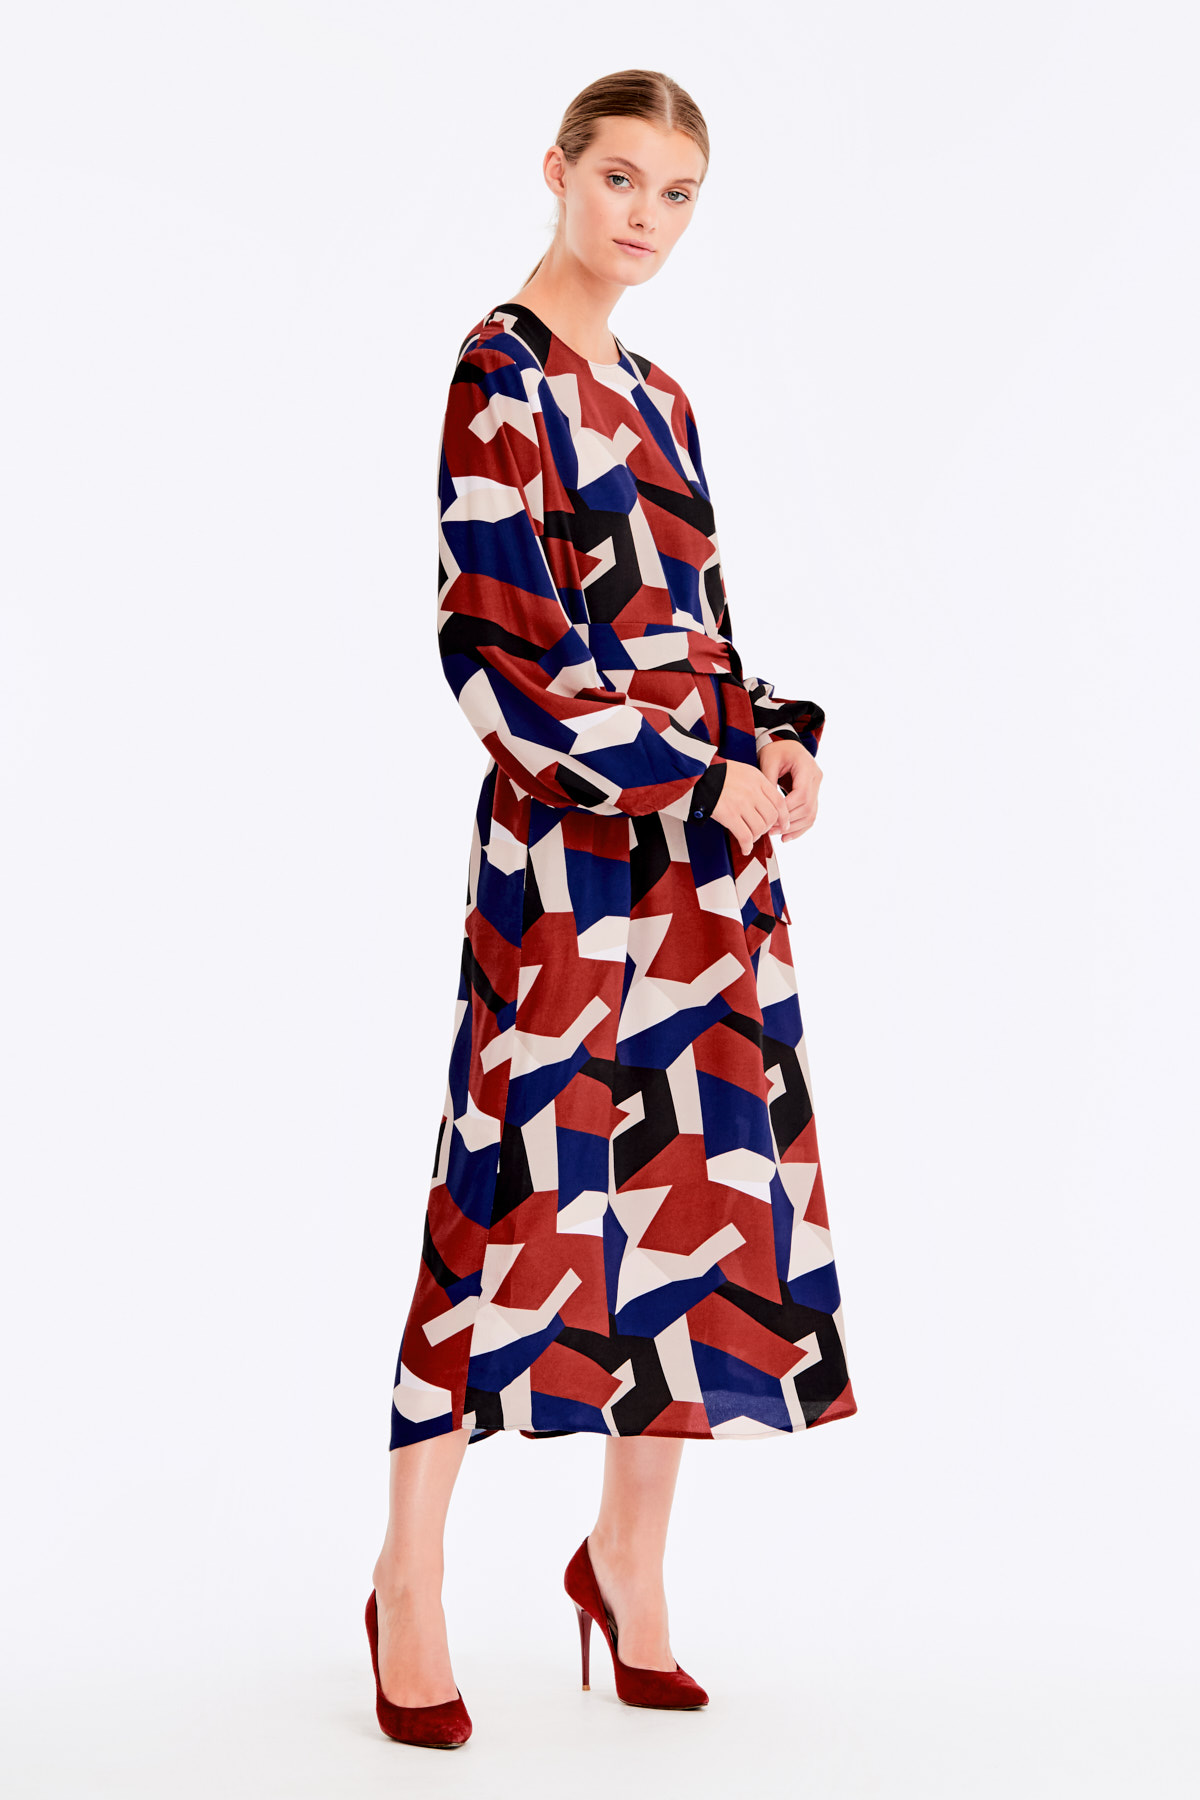 Free midi dress with variegated geometric print ¶¶, photo 5